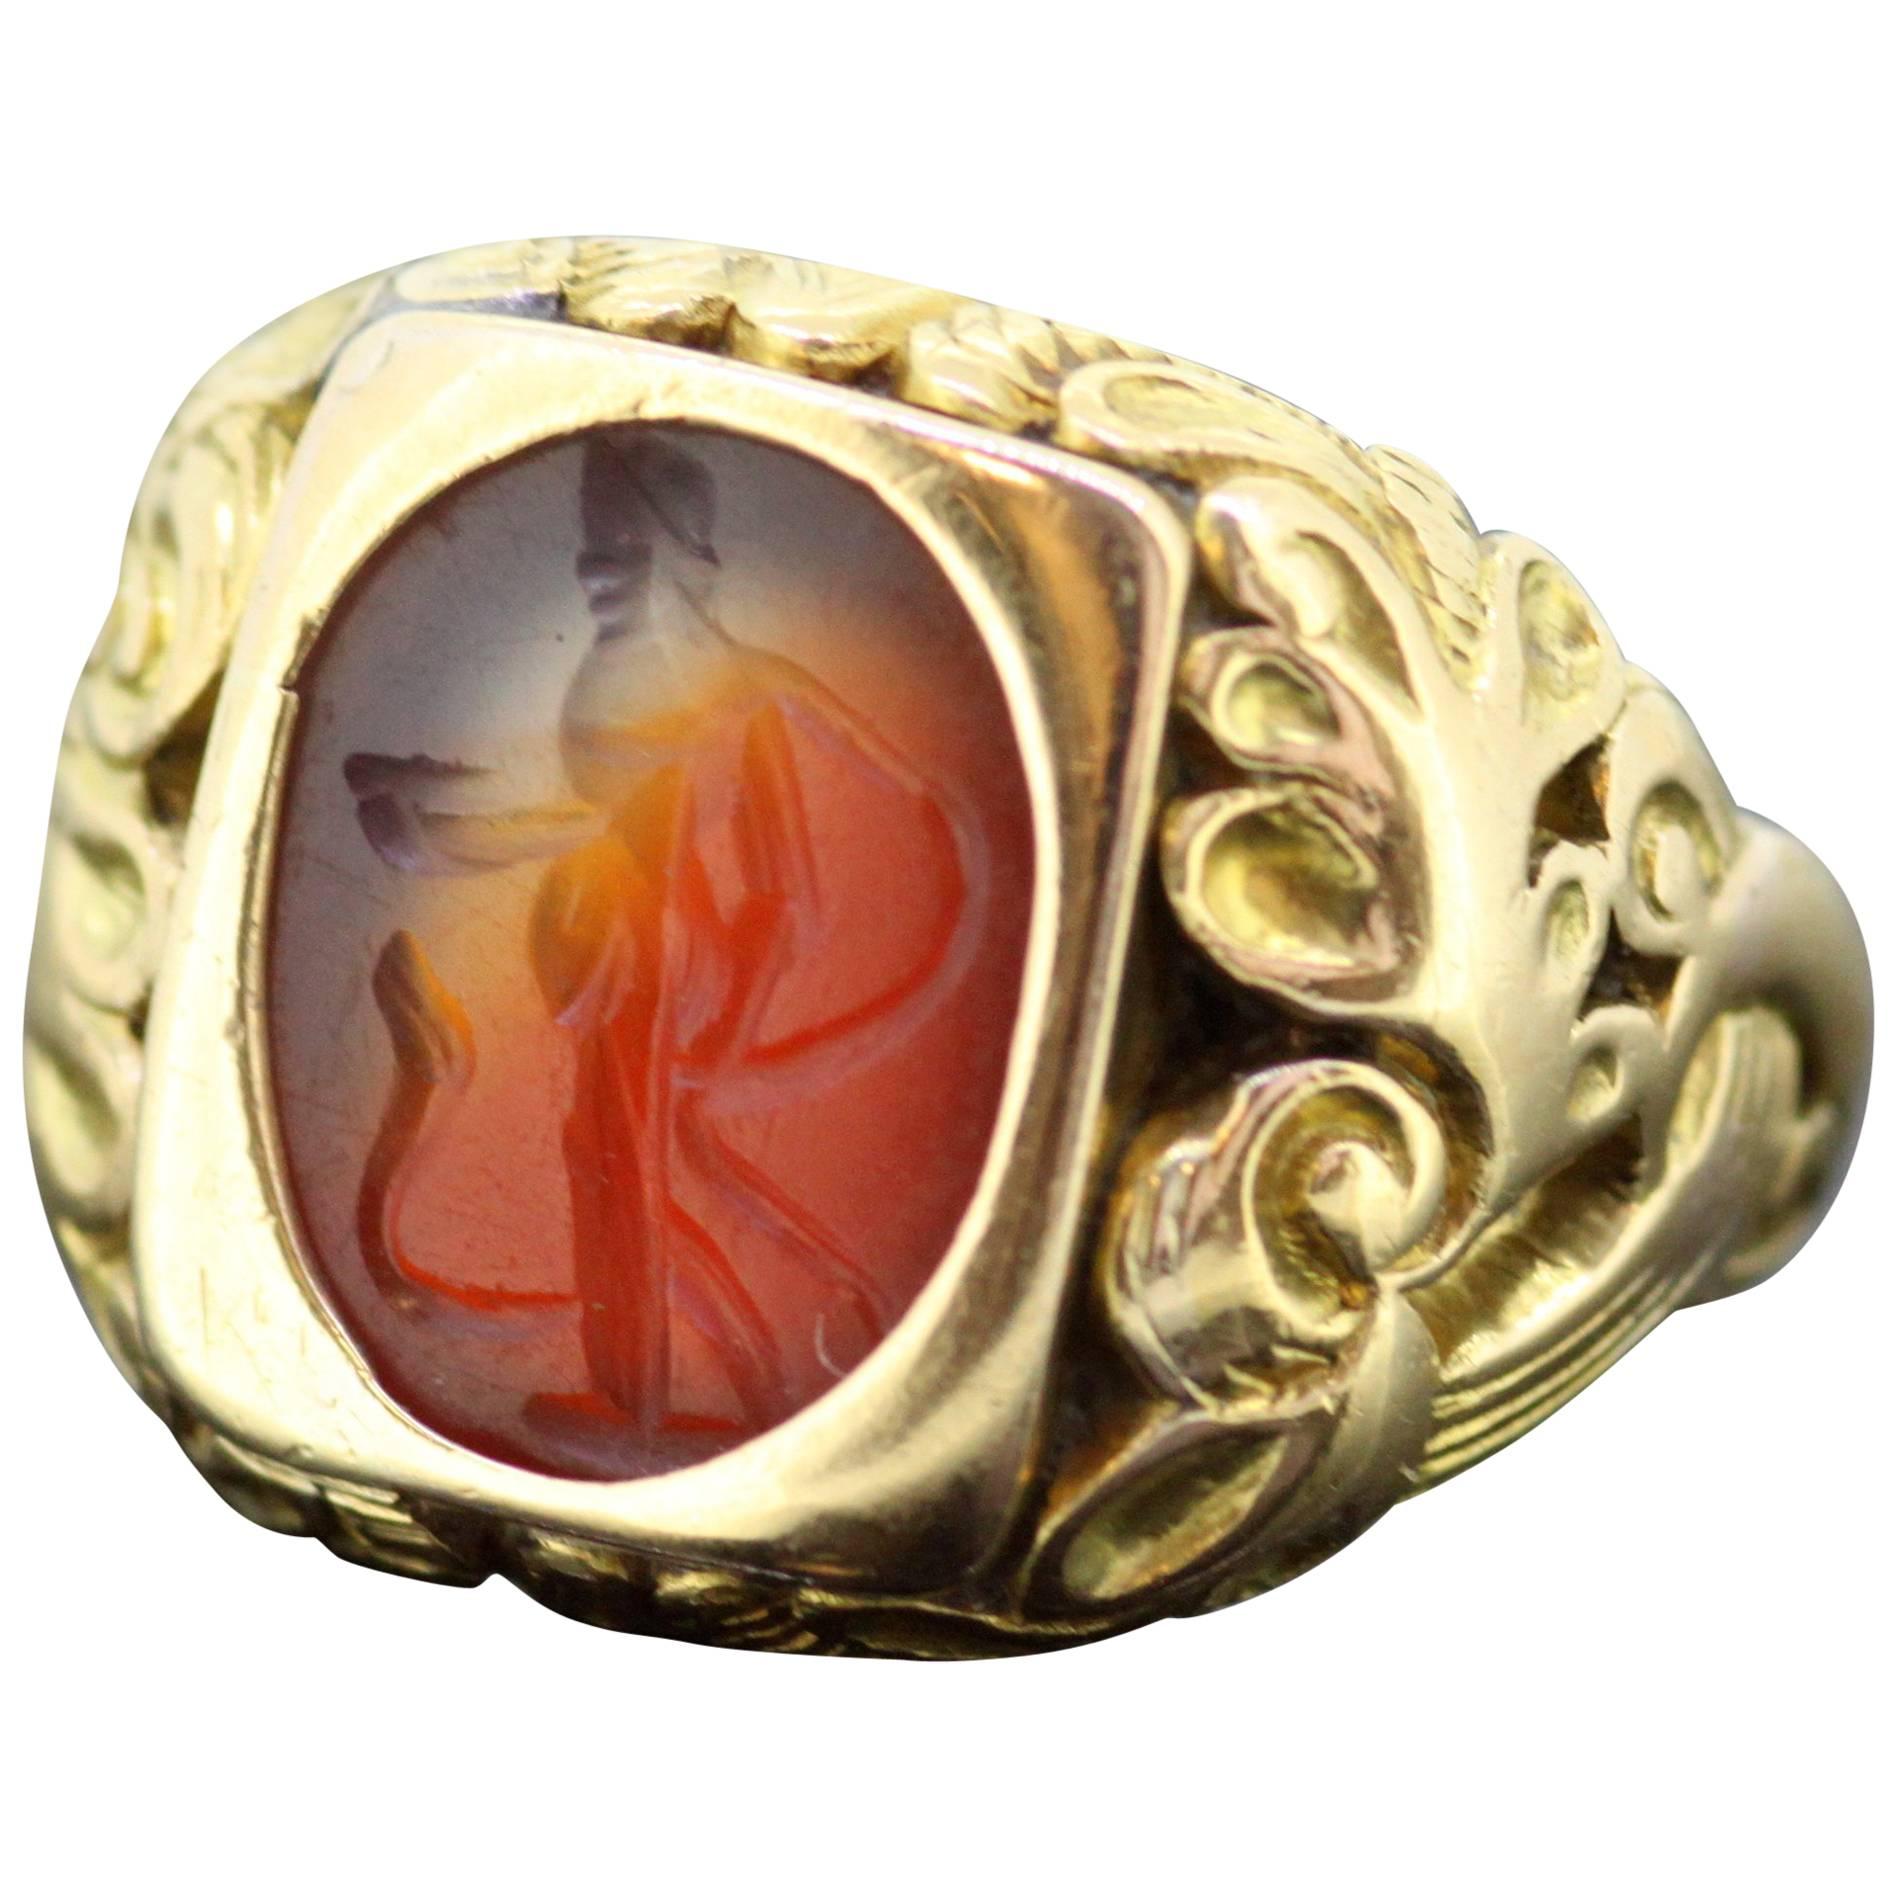 Antique 18 Karat Roman Carnelian Seal Ring ‘200 BC’ with Victorian Ring Shank